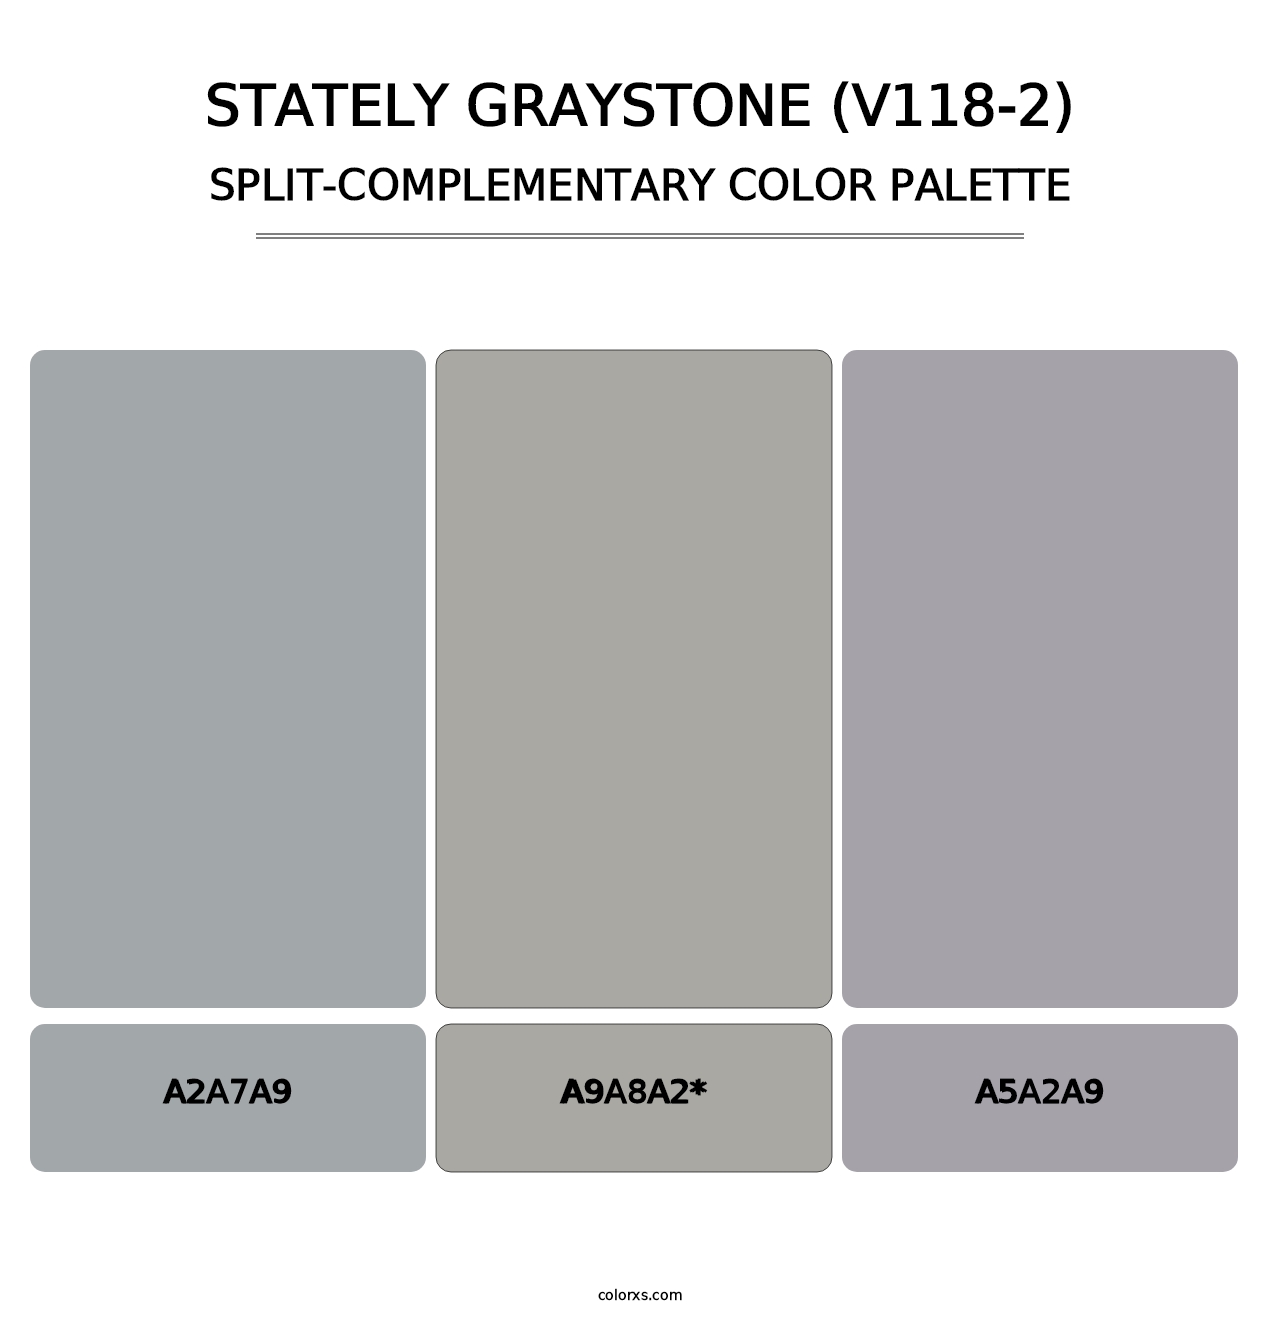 Stately Graystone (V118-2) - Split-Complementary Color Palette